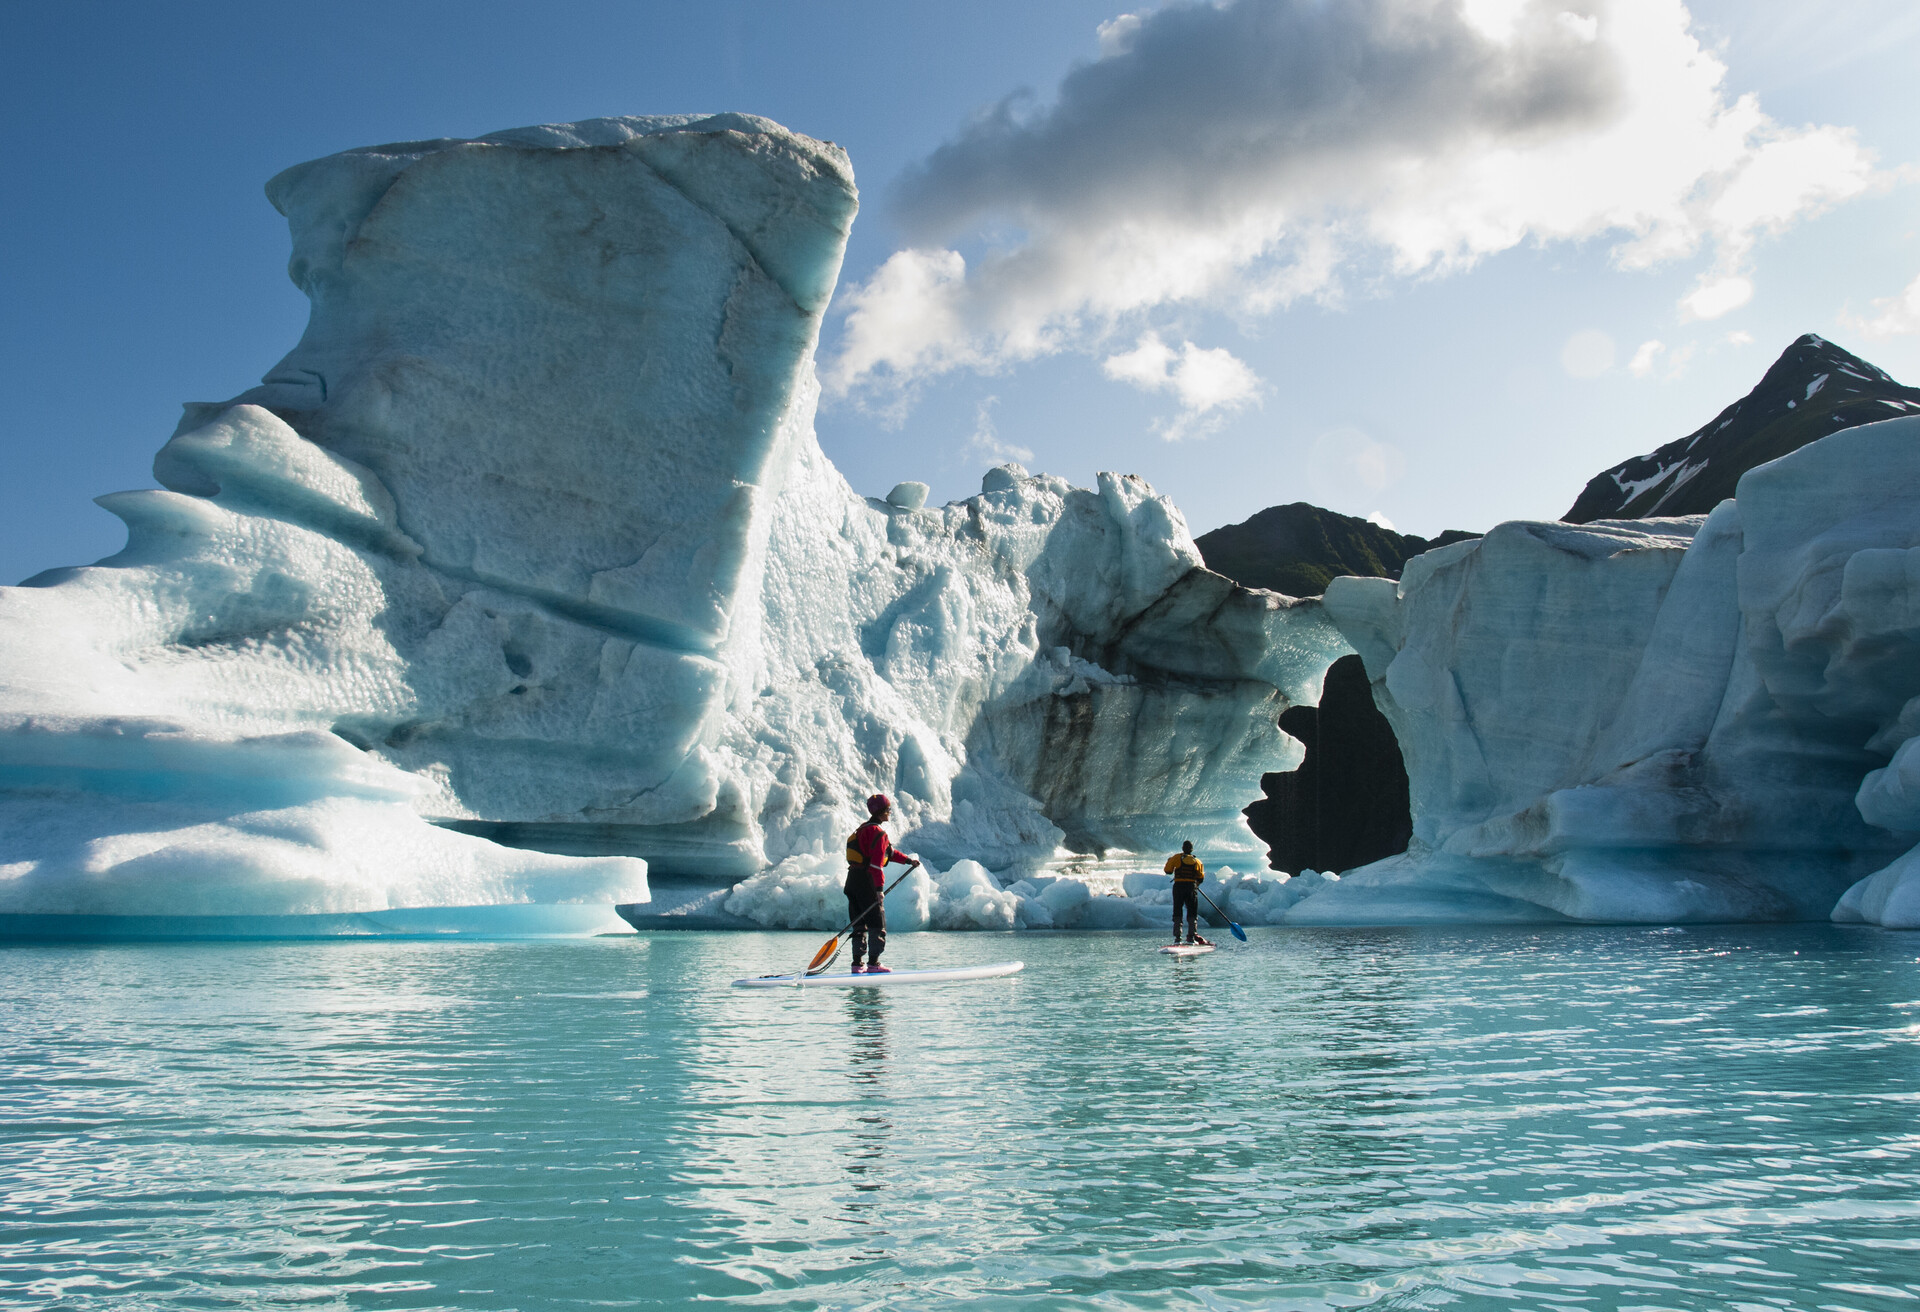 usa_alaska_bear-lake_kenai-fjords-national-park_theme_people_tourists_on_stand-up-paddle-board